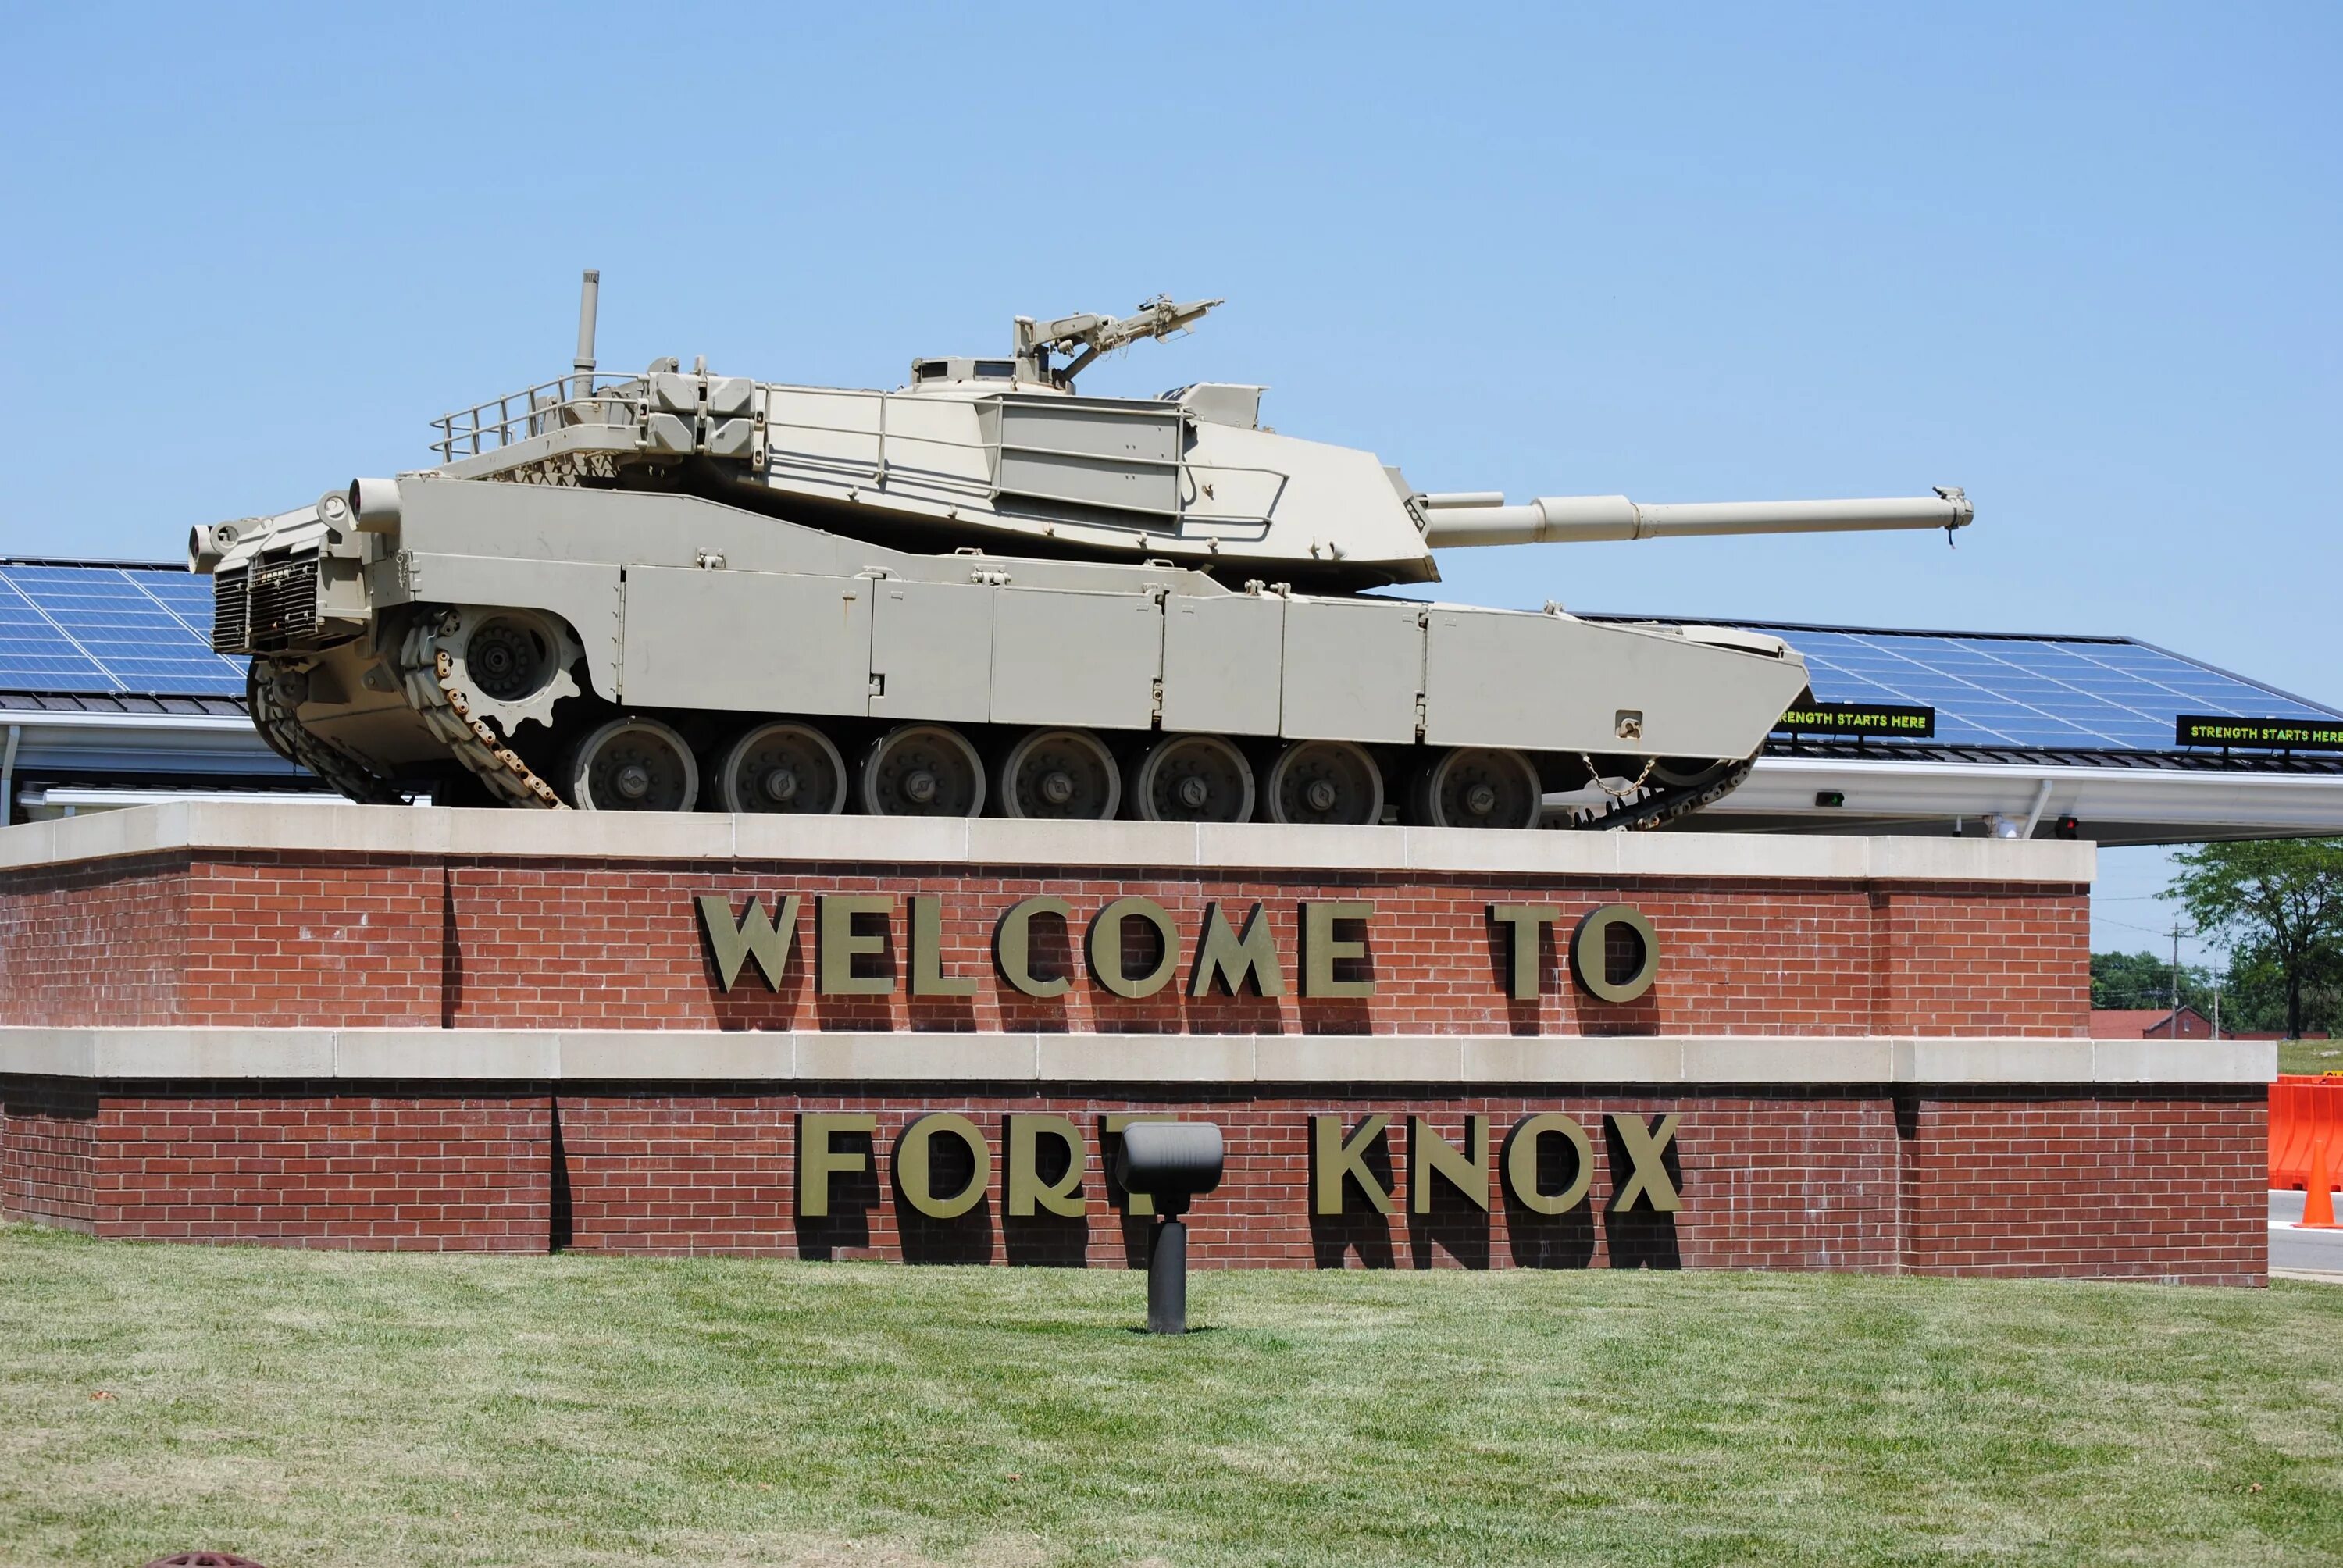 Fort knox. Форт-Нокс (Кентукки, США). Базе Форт-Нокс. Золотохранилище США Форт Нокс. Здание Форт Нокс.